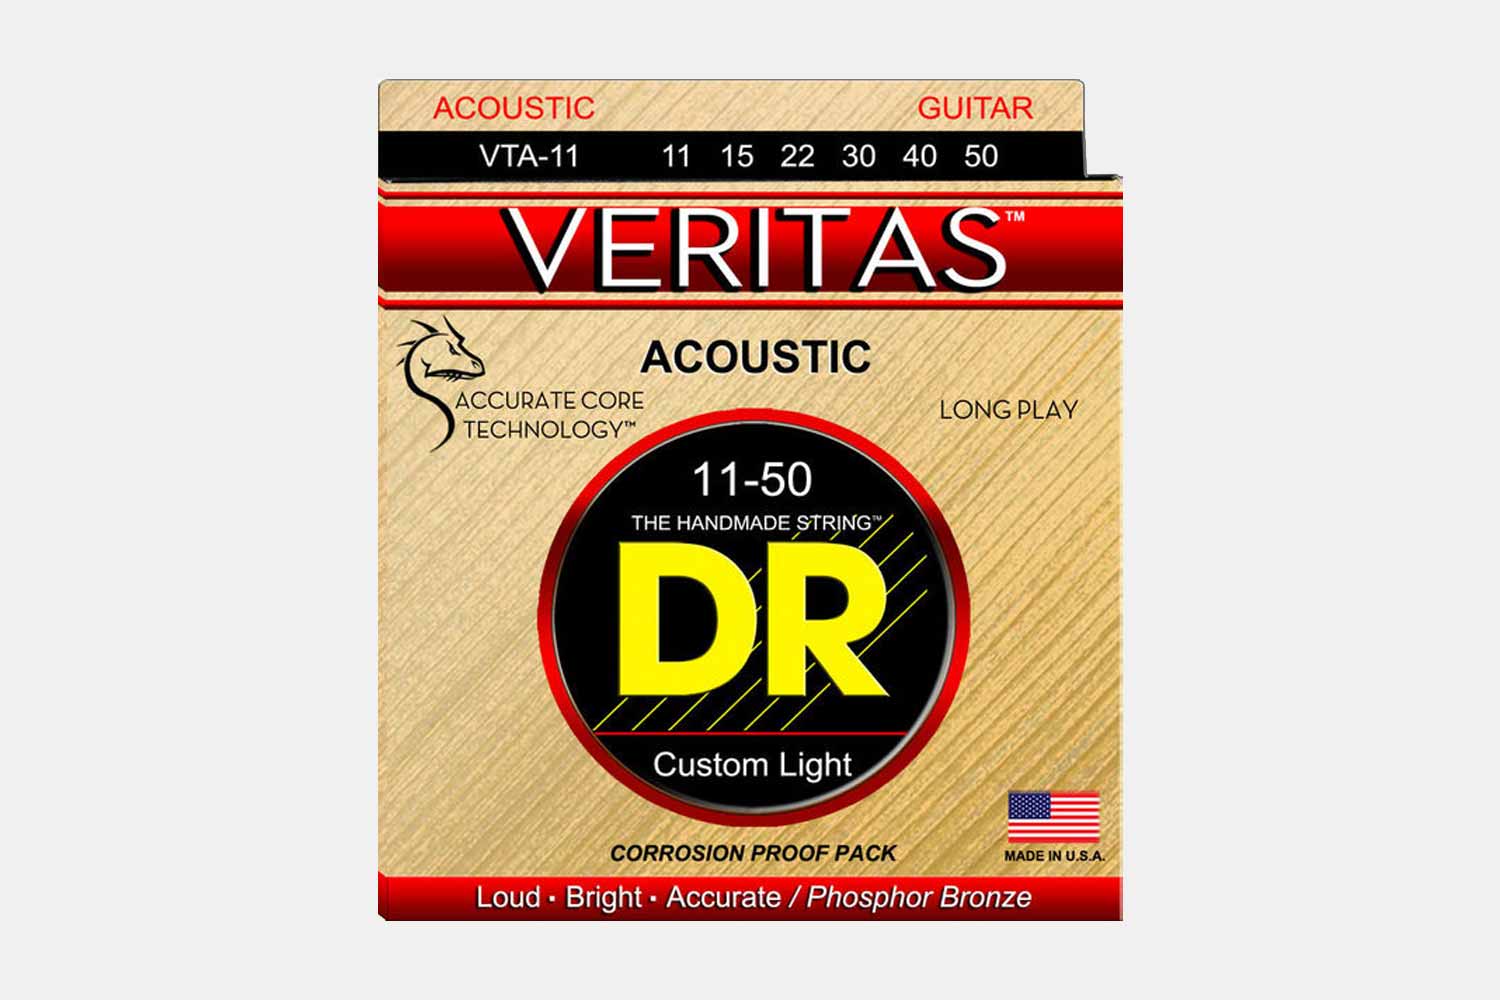 DR VTA-11 - Veritas Custom Light 011-050 Phosphor Bronze Gitaarsnaren (5584701161636)